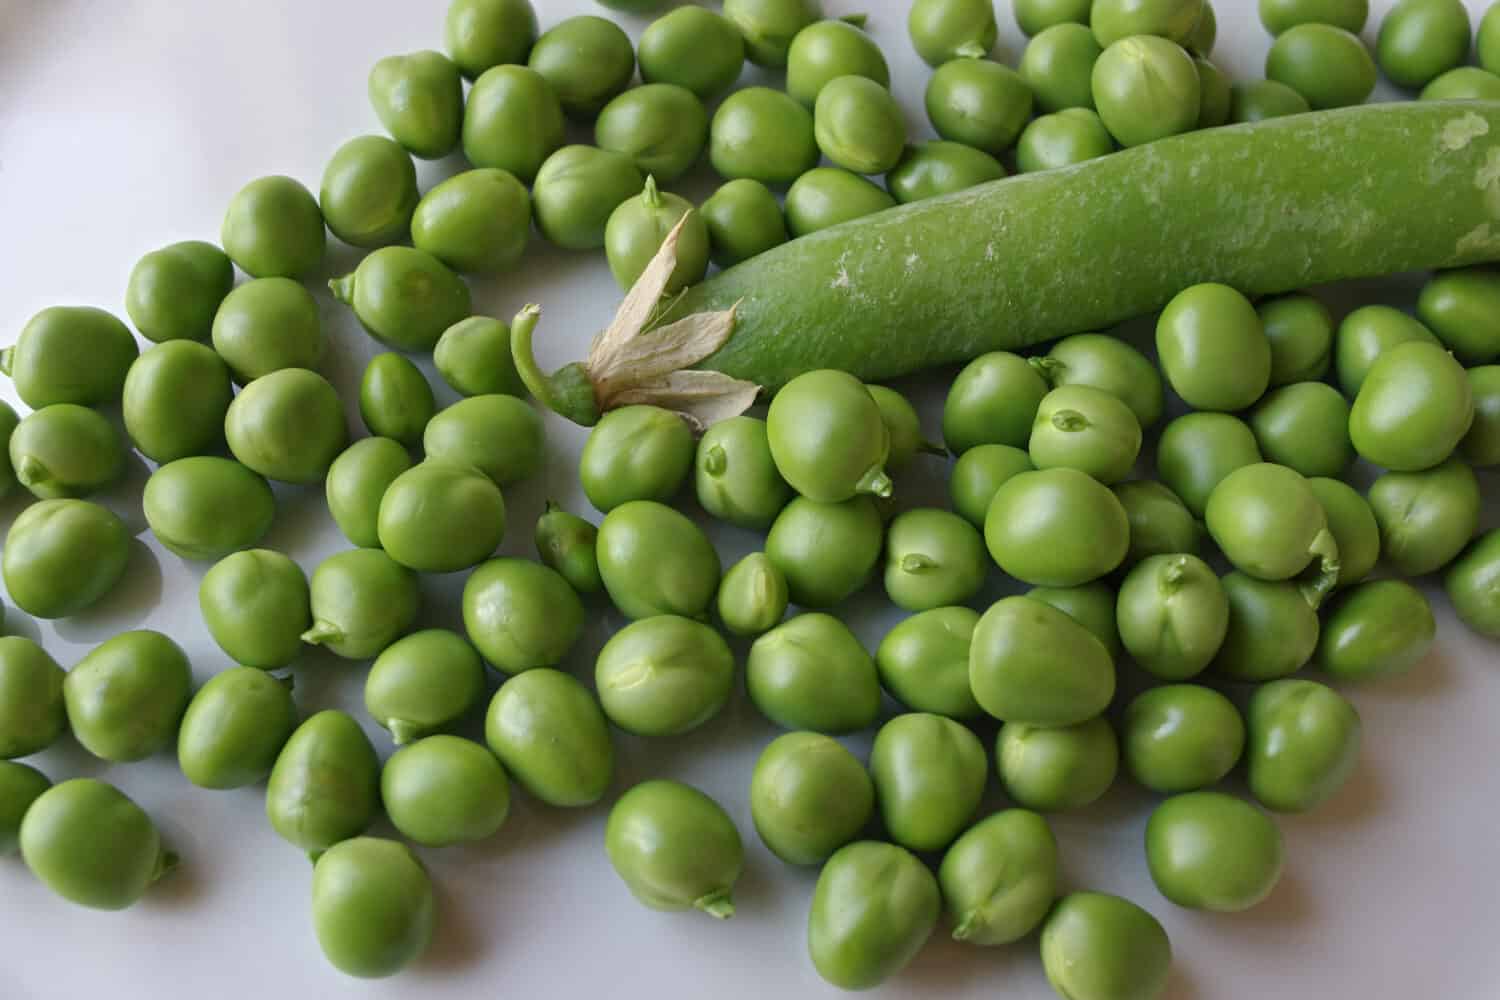 Fresh English peas. Photo taken at a farmers market in Southern California. 